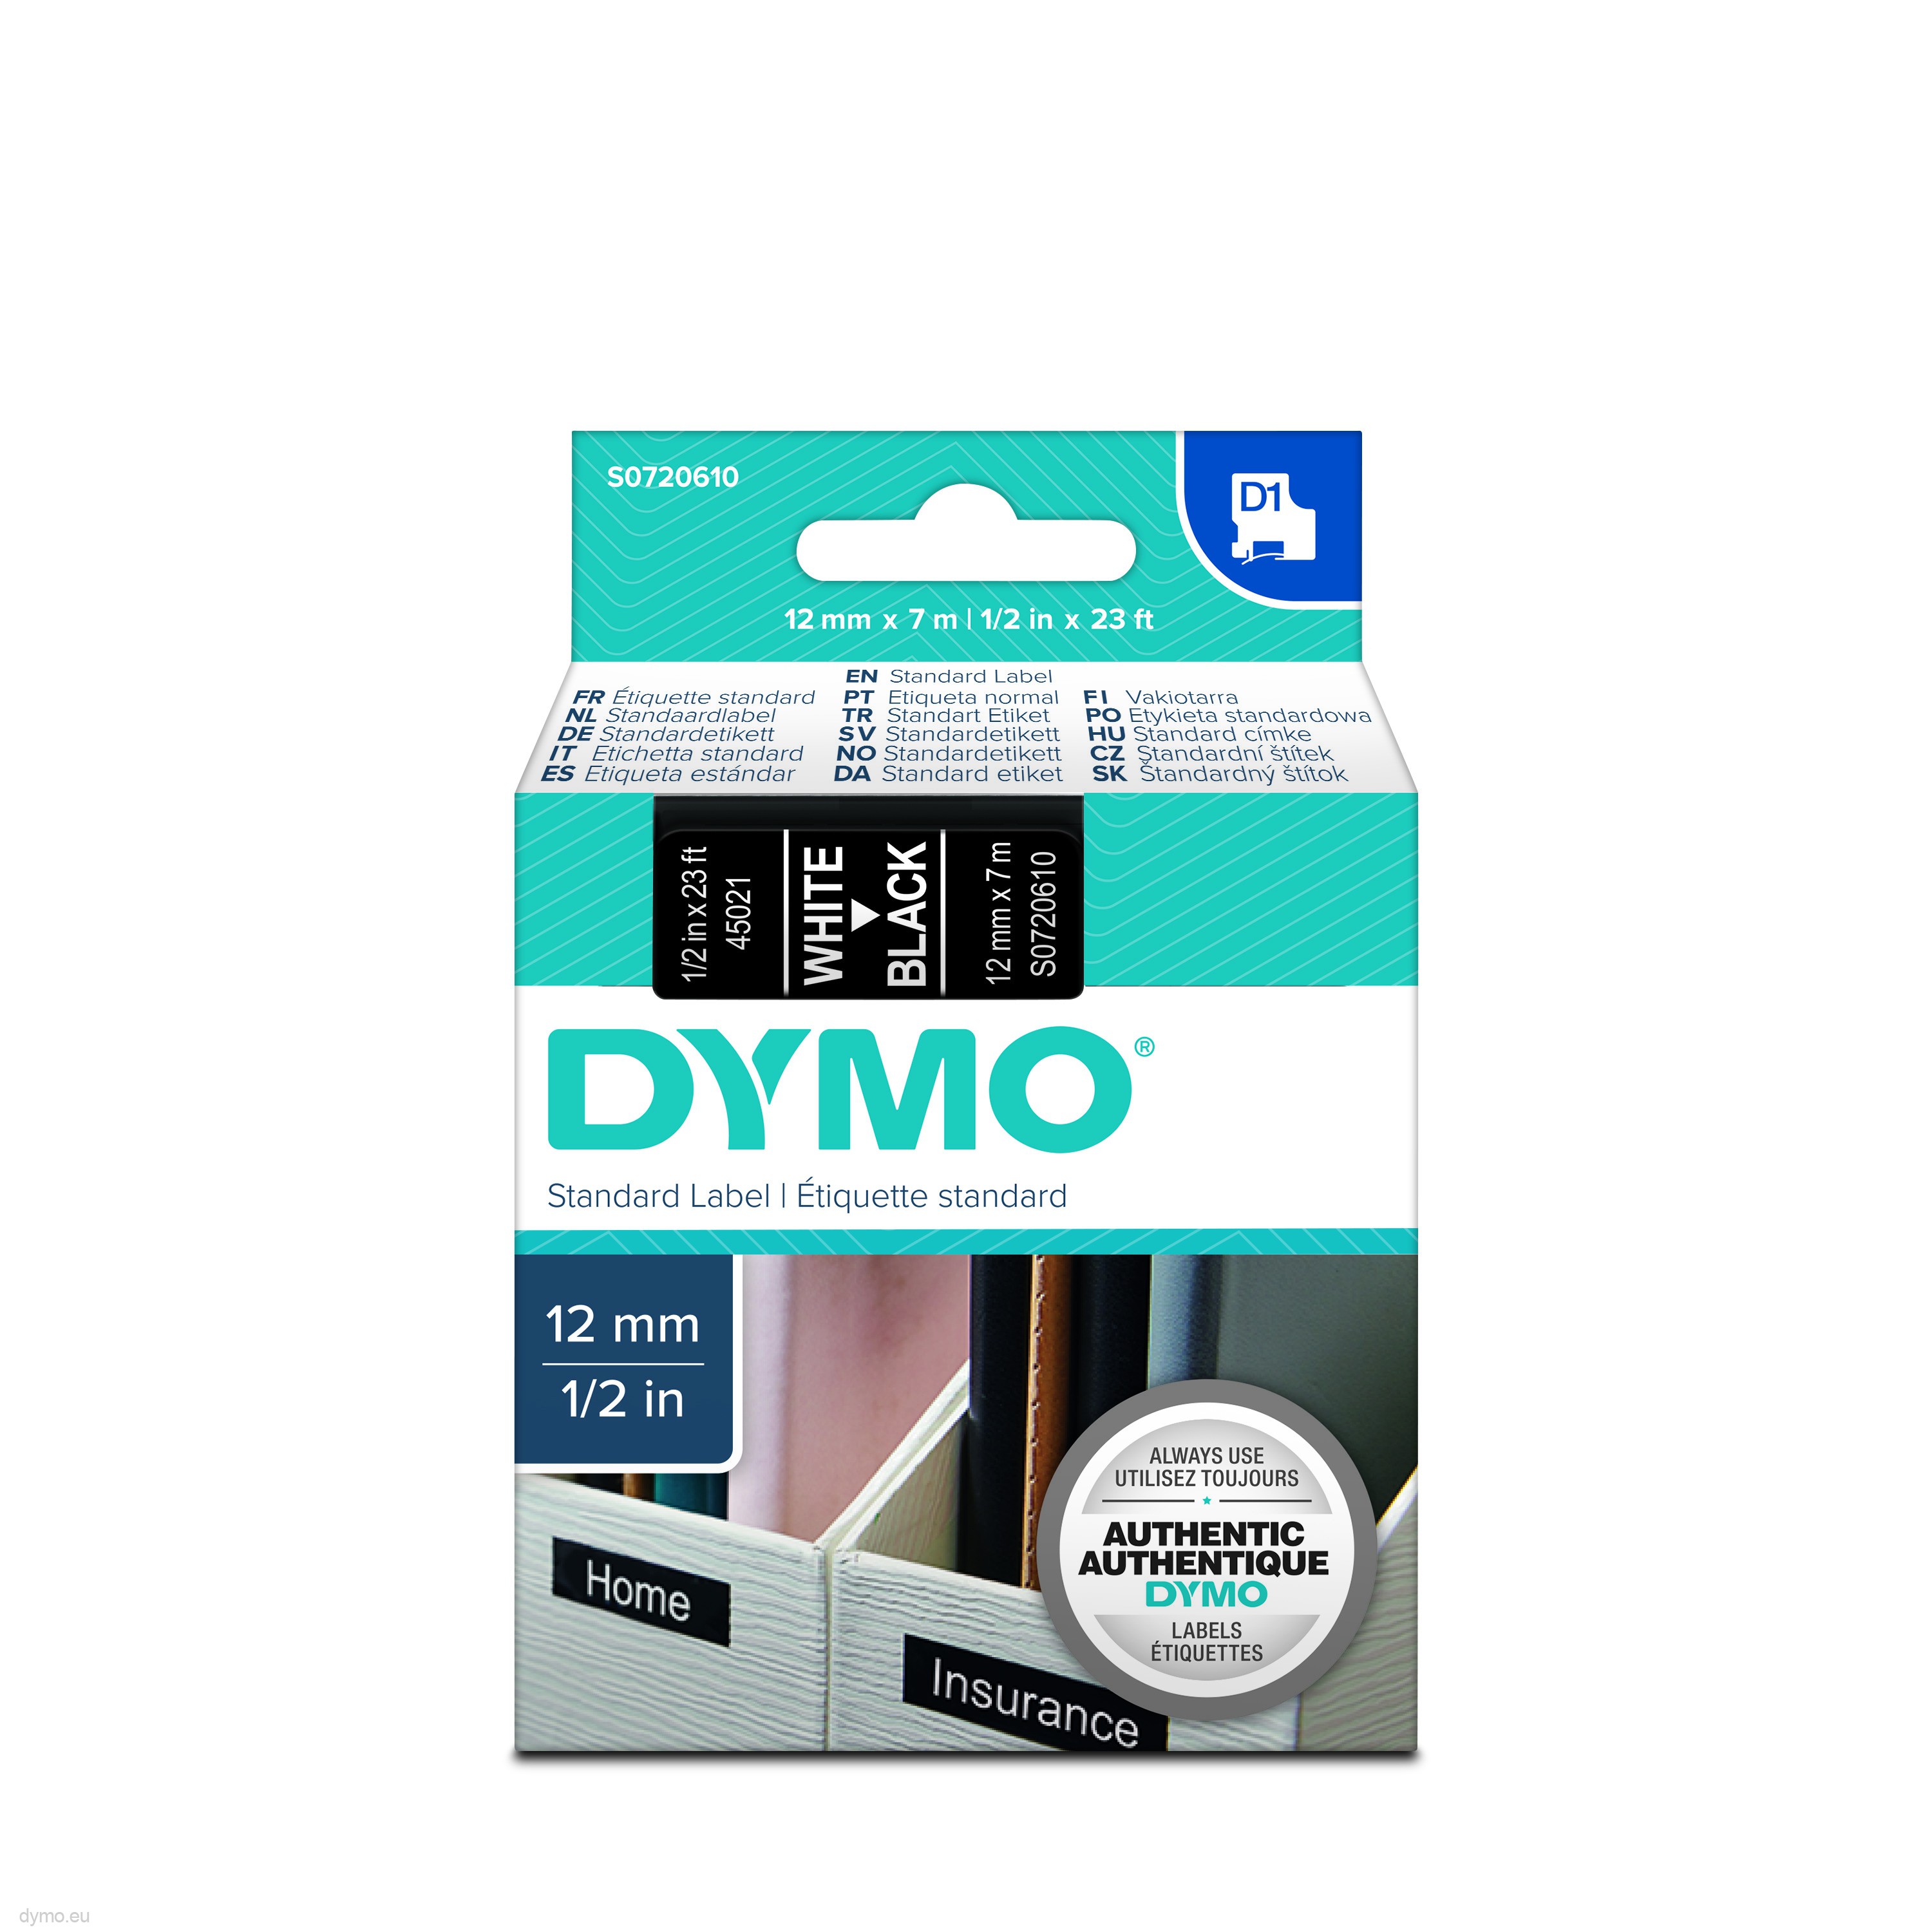 5000 Signature tape cassette tape 19mm S-W for Dymo 2000 5500 